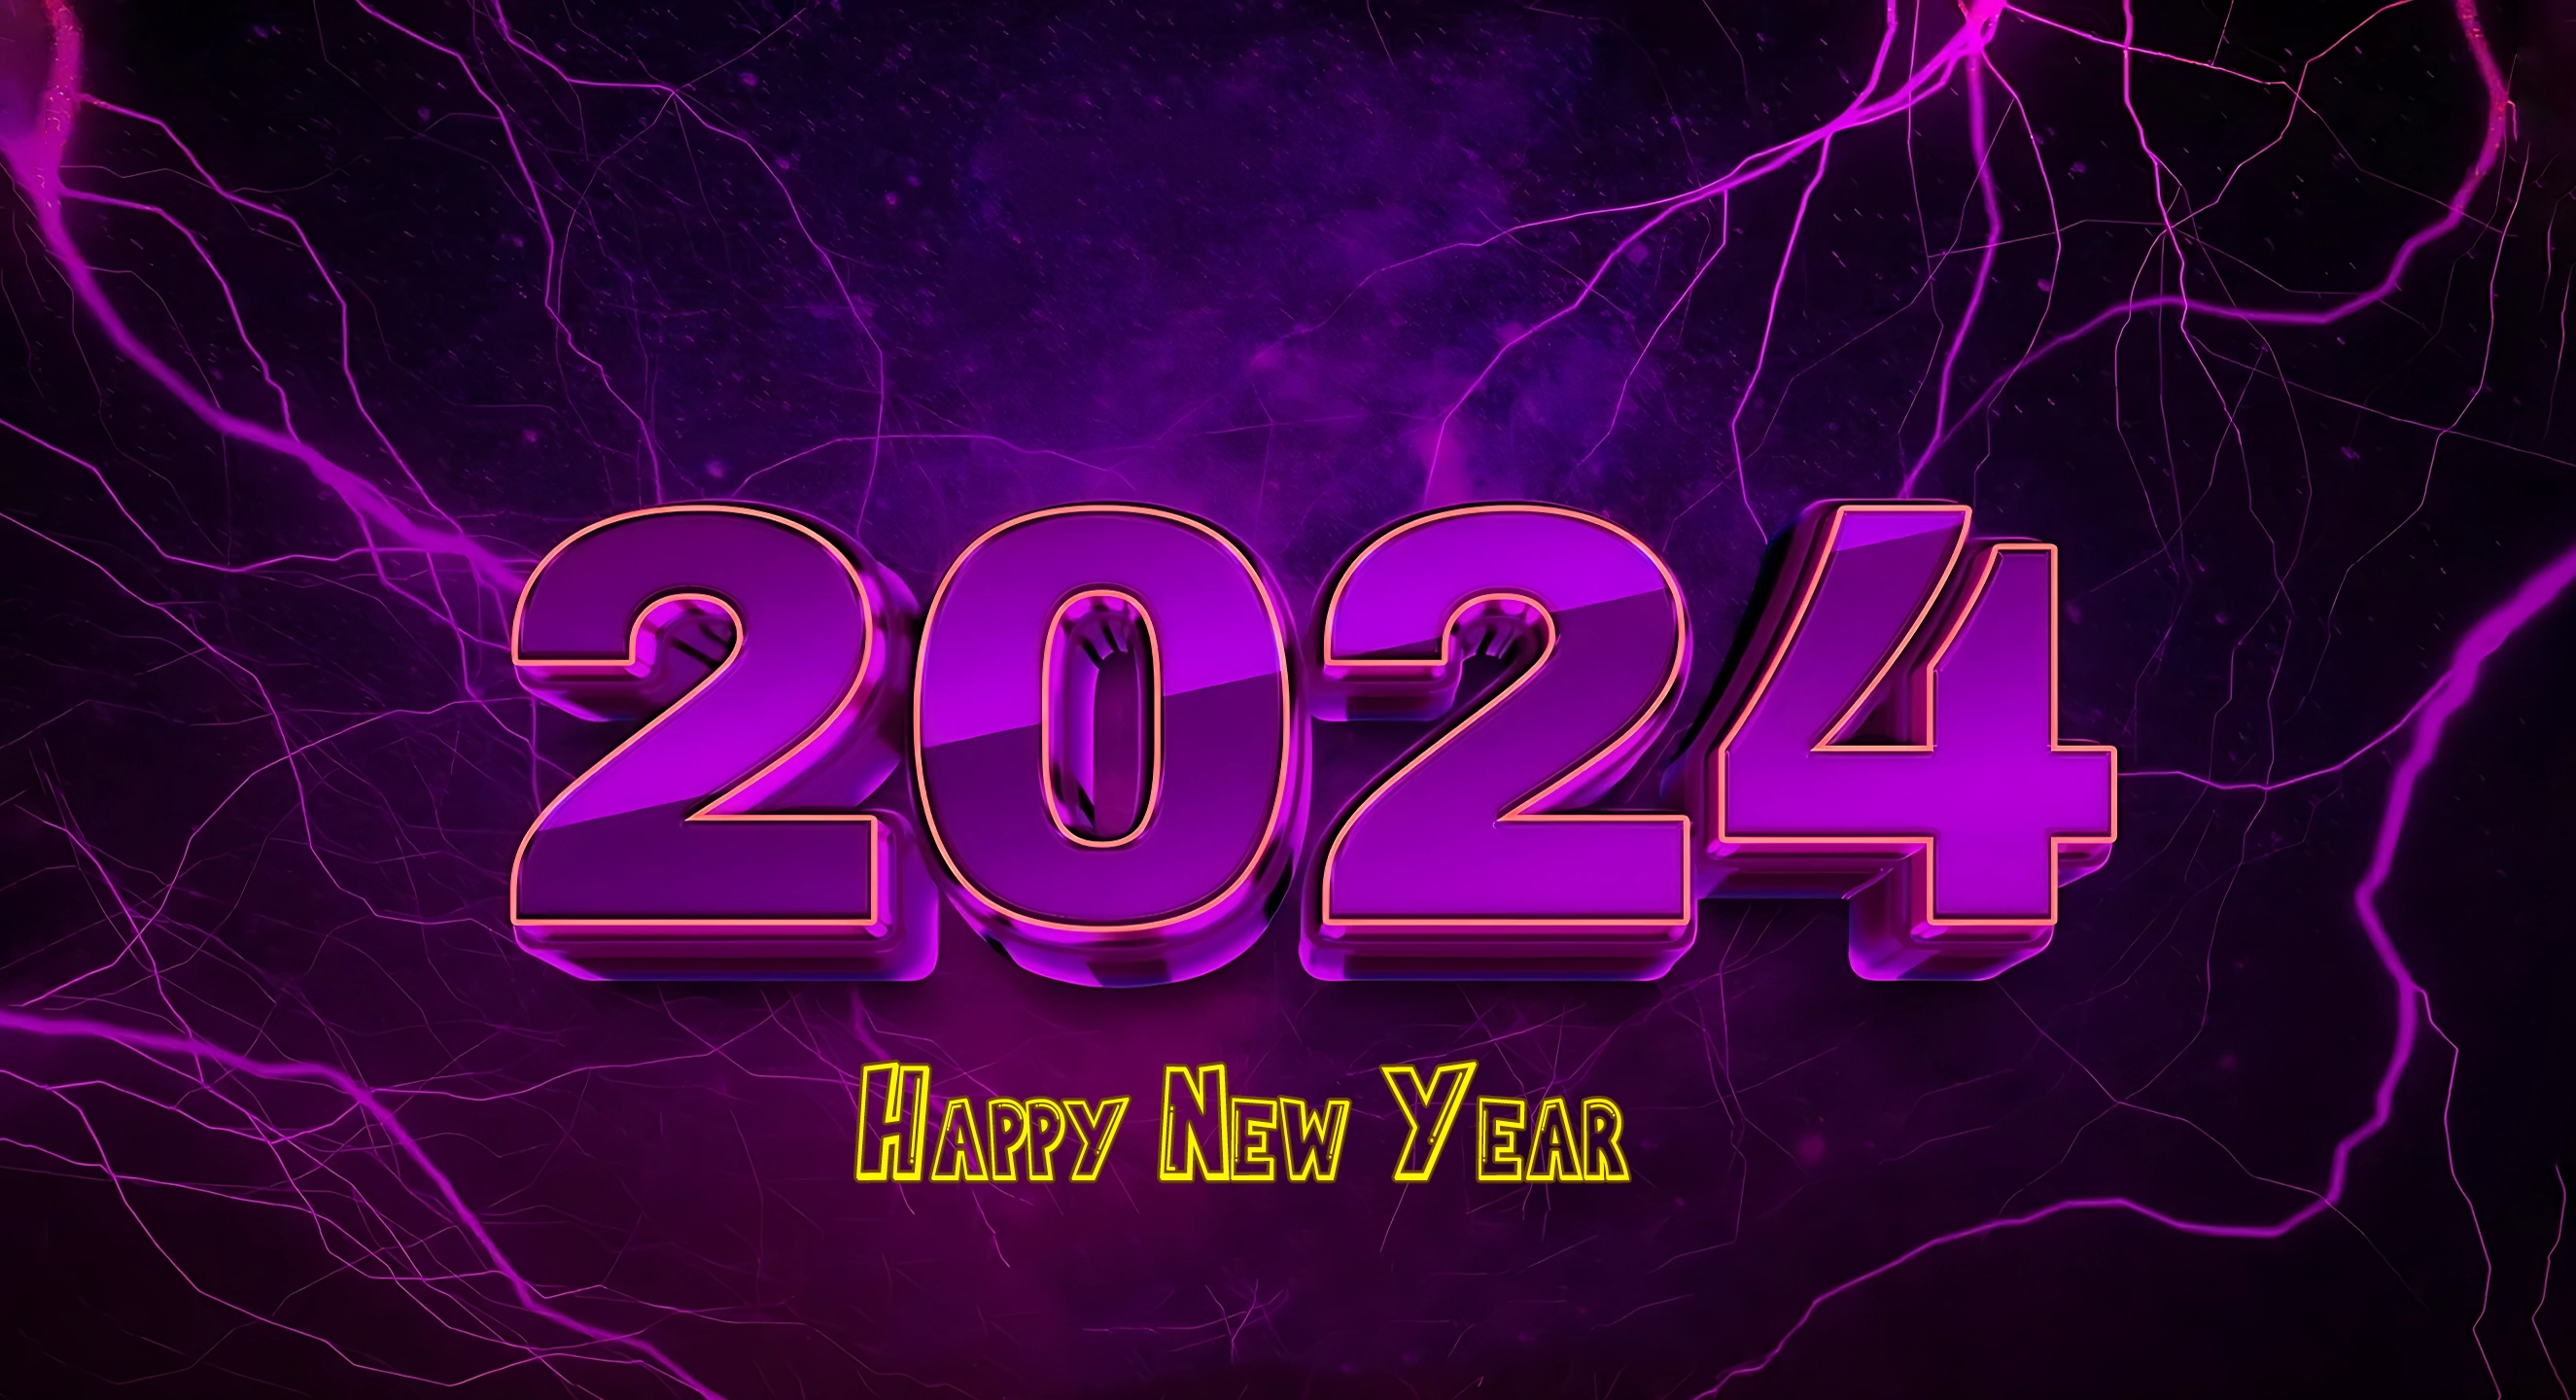 Happy new year 2023 purple image wallpaper